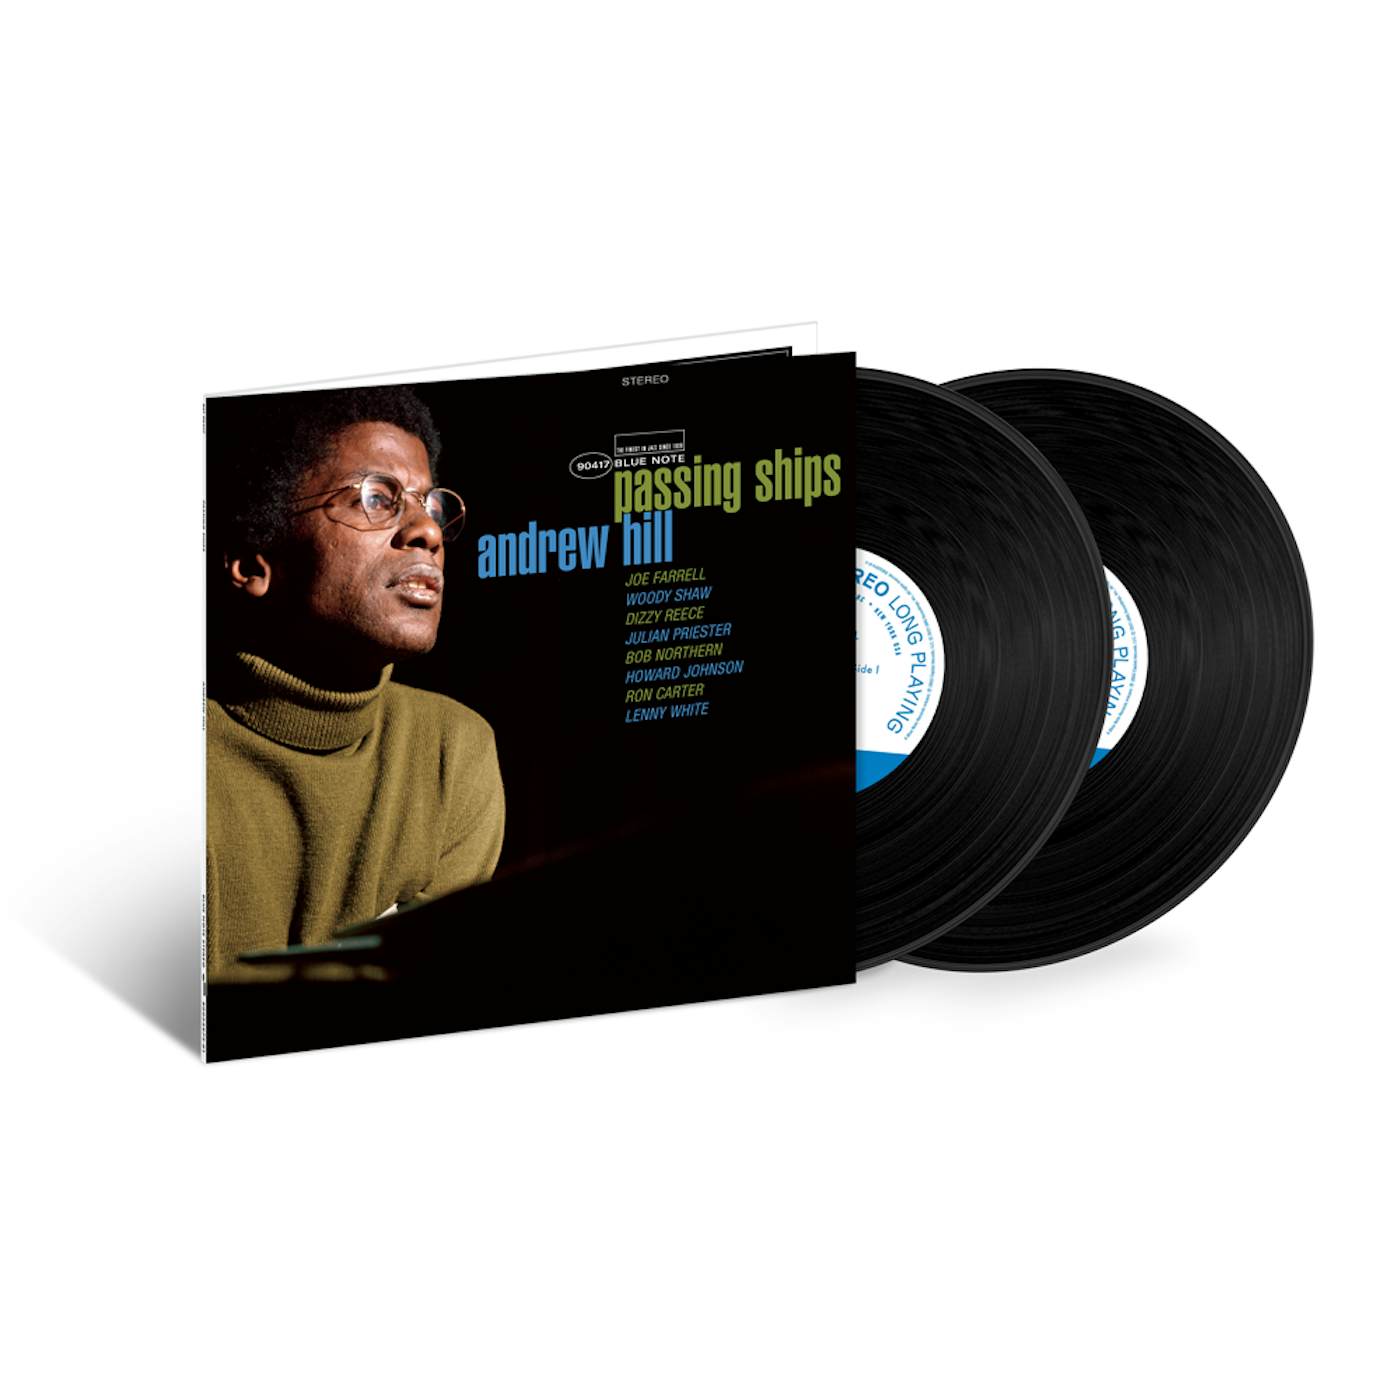 Andrew Hill - Passing Ships 2LP (Blue Note Tone Poet Series) (Vinyl)